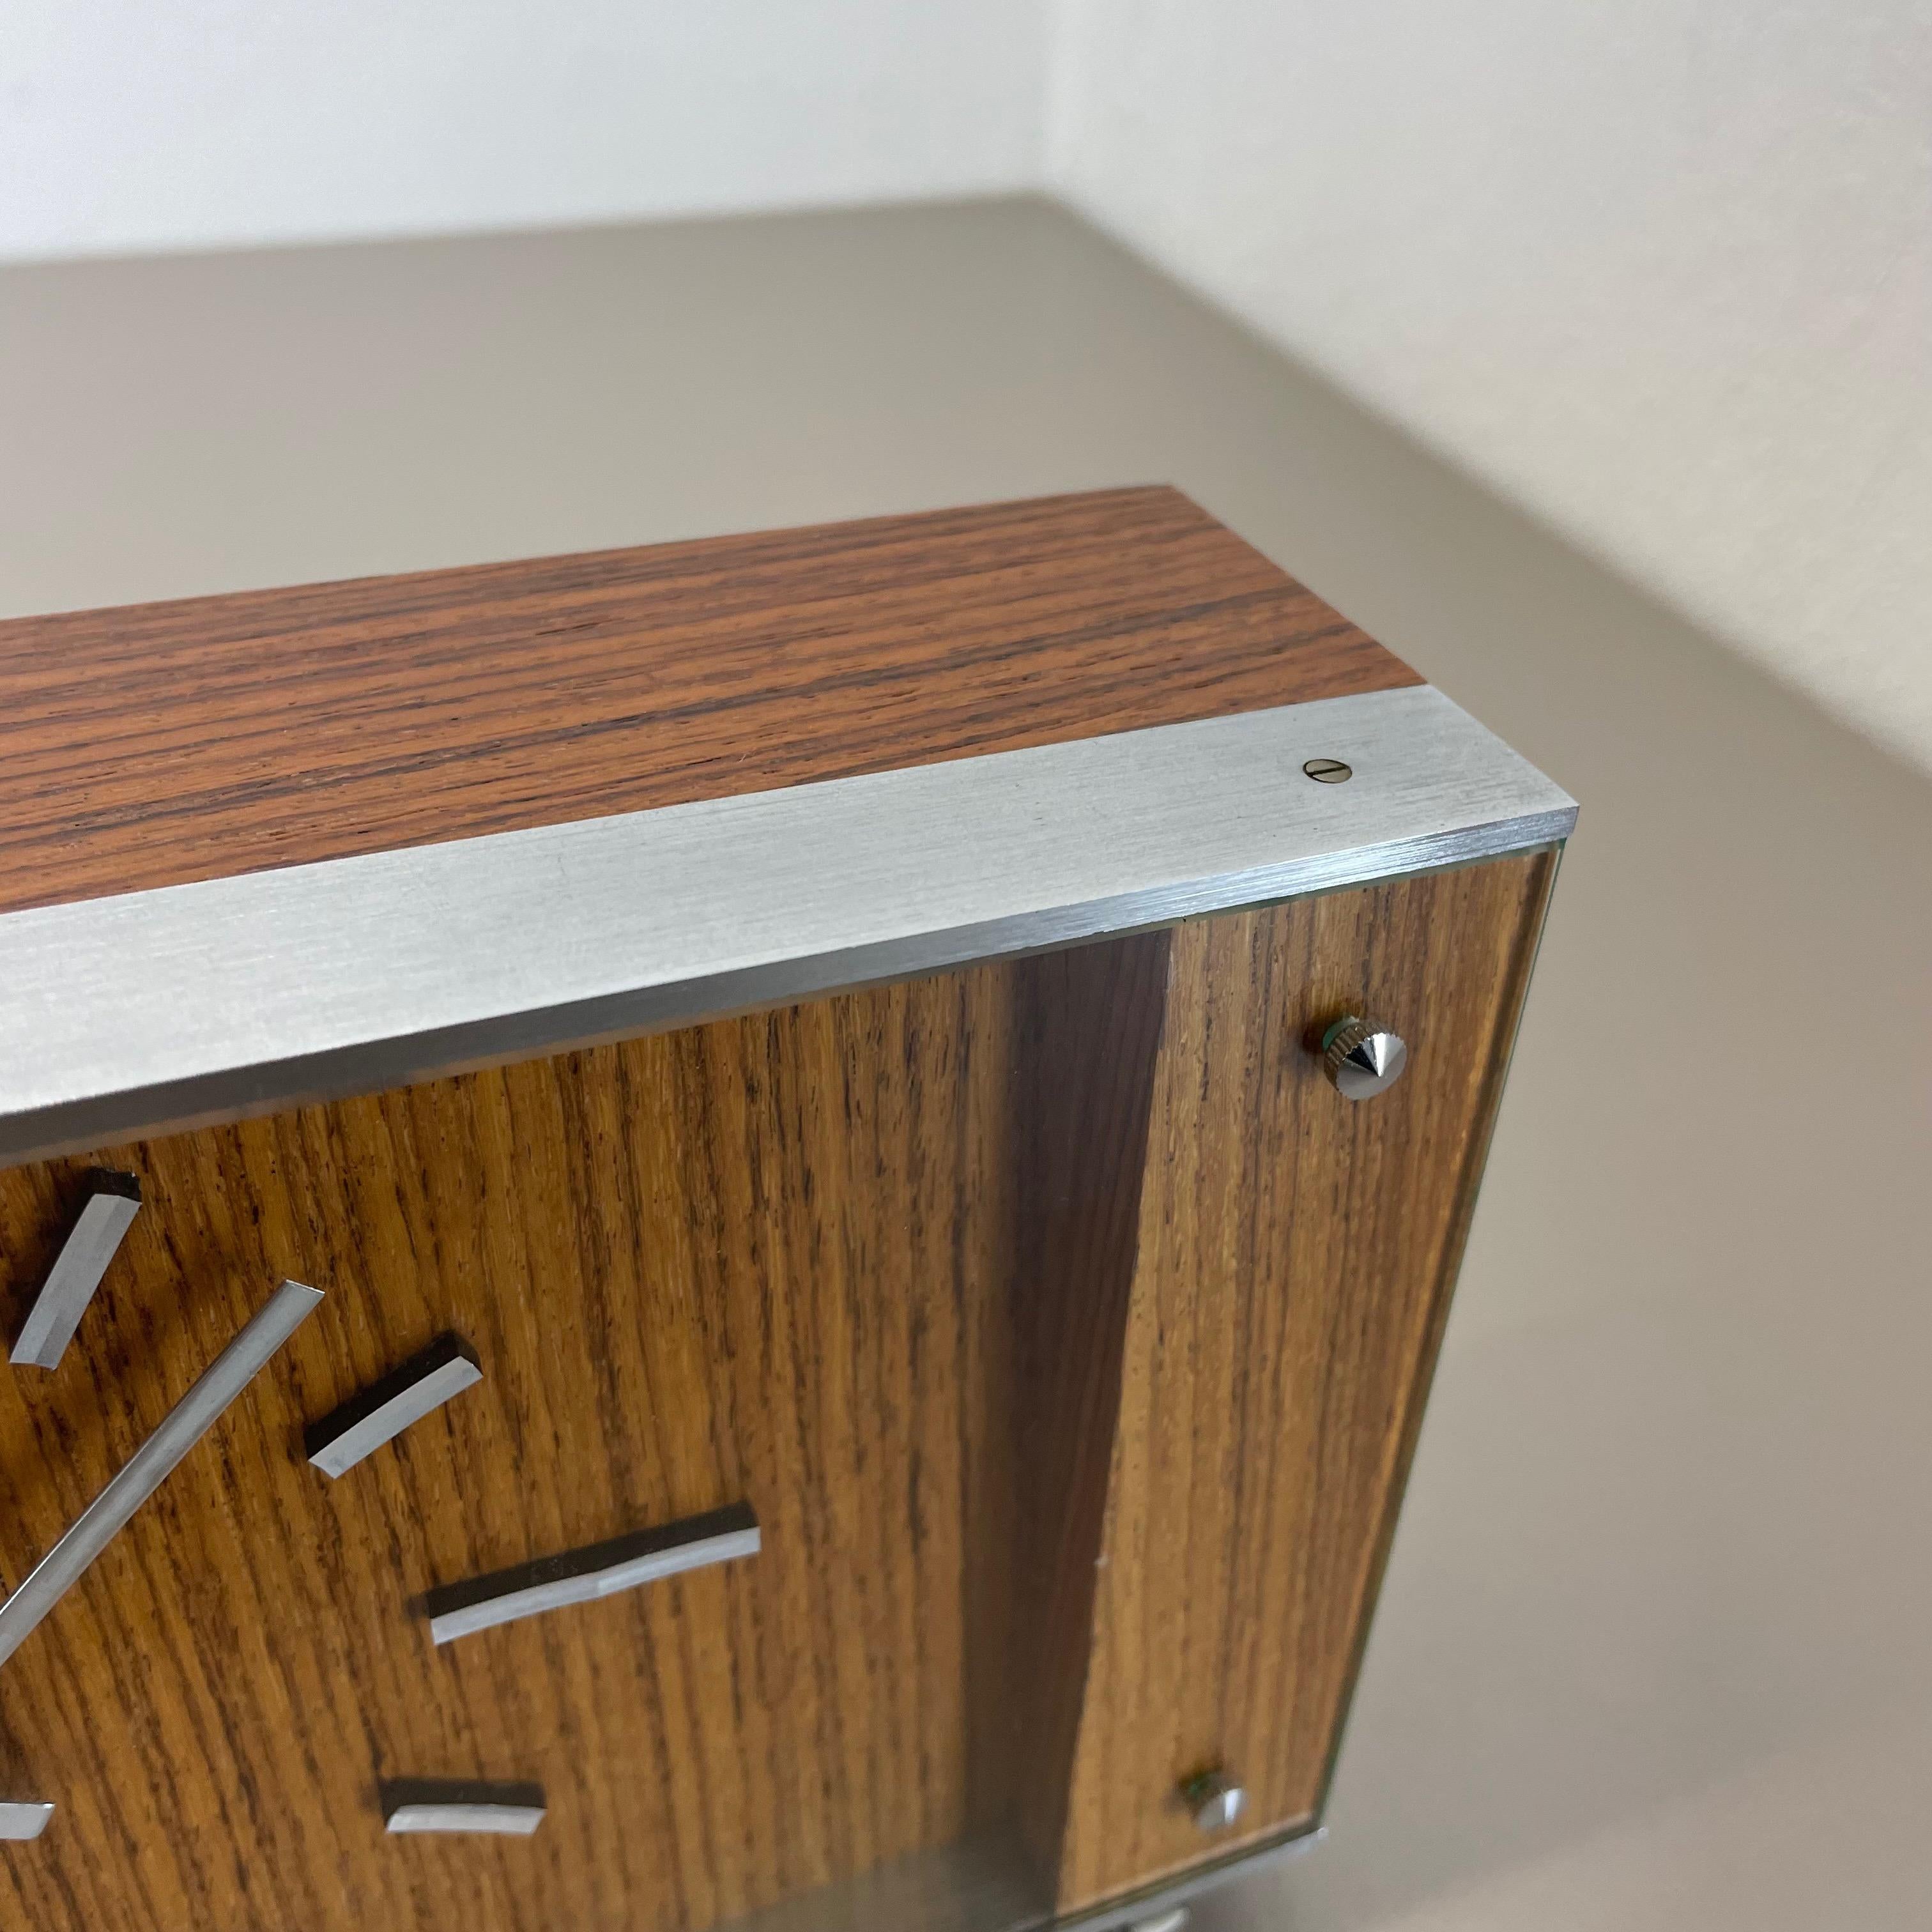 Vintage Modernist Wooden Teak Metal Table Clock by Zentra, Germany 1970s For Sale 4